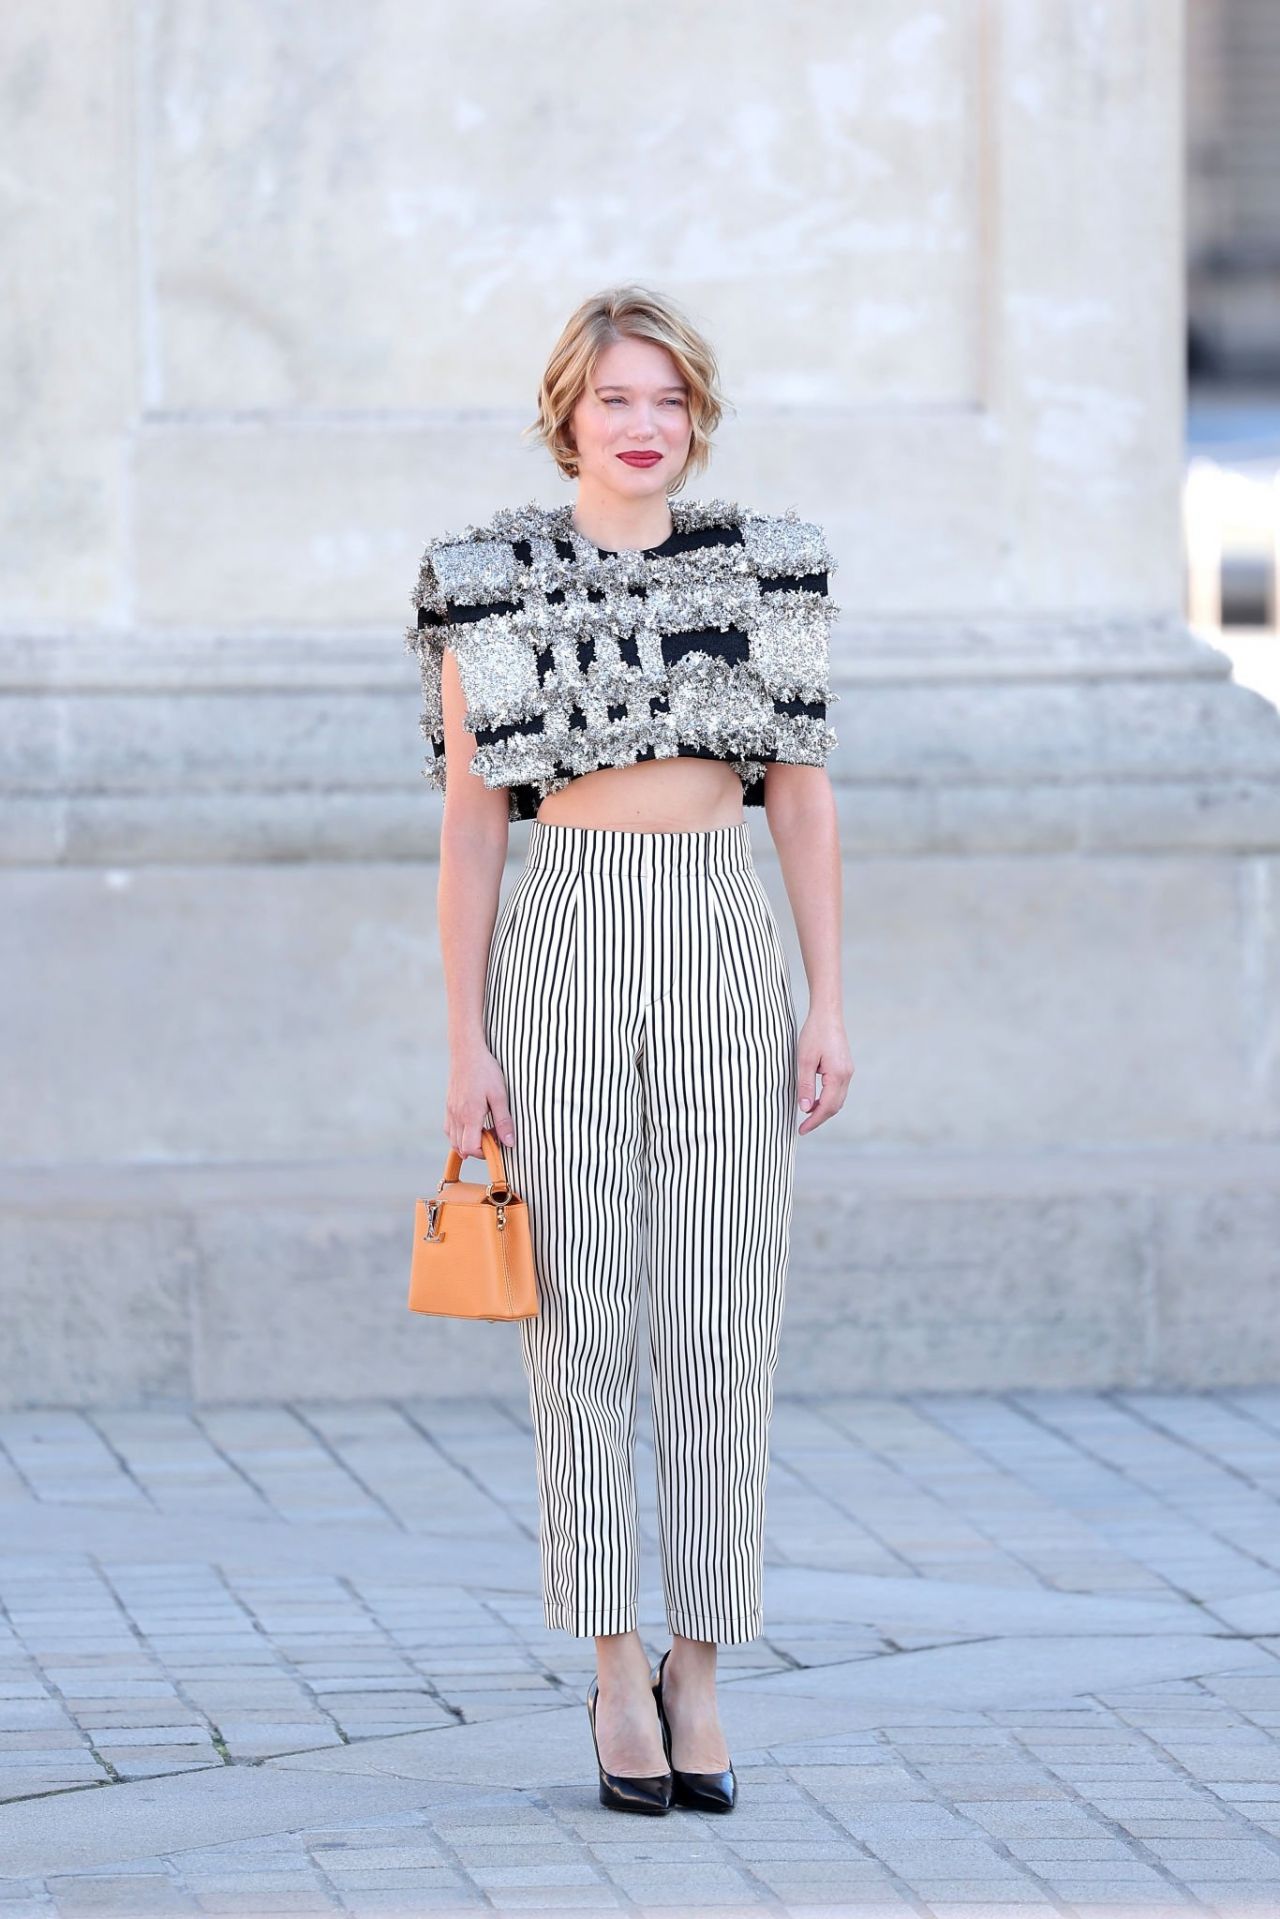 Lea Seydoux Says So Long to Prada, Hello to Louis Vuitton